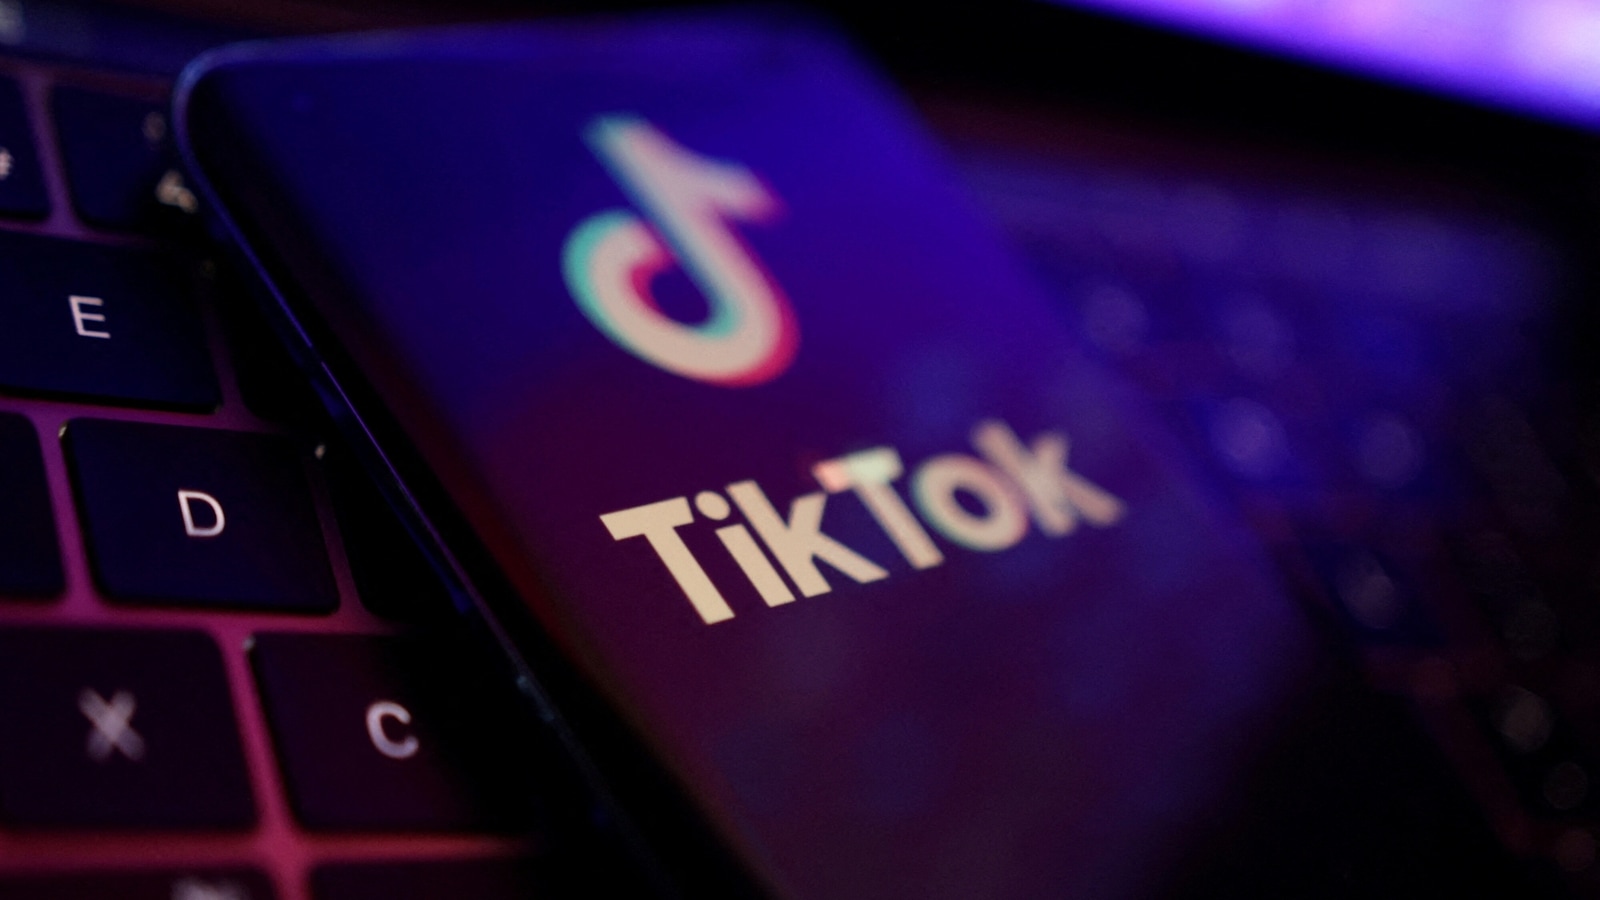 TikTok, Twitter user numbers bring them under strict EU rules